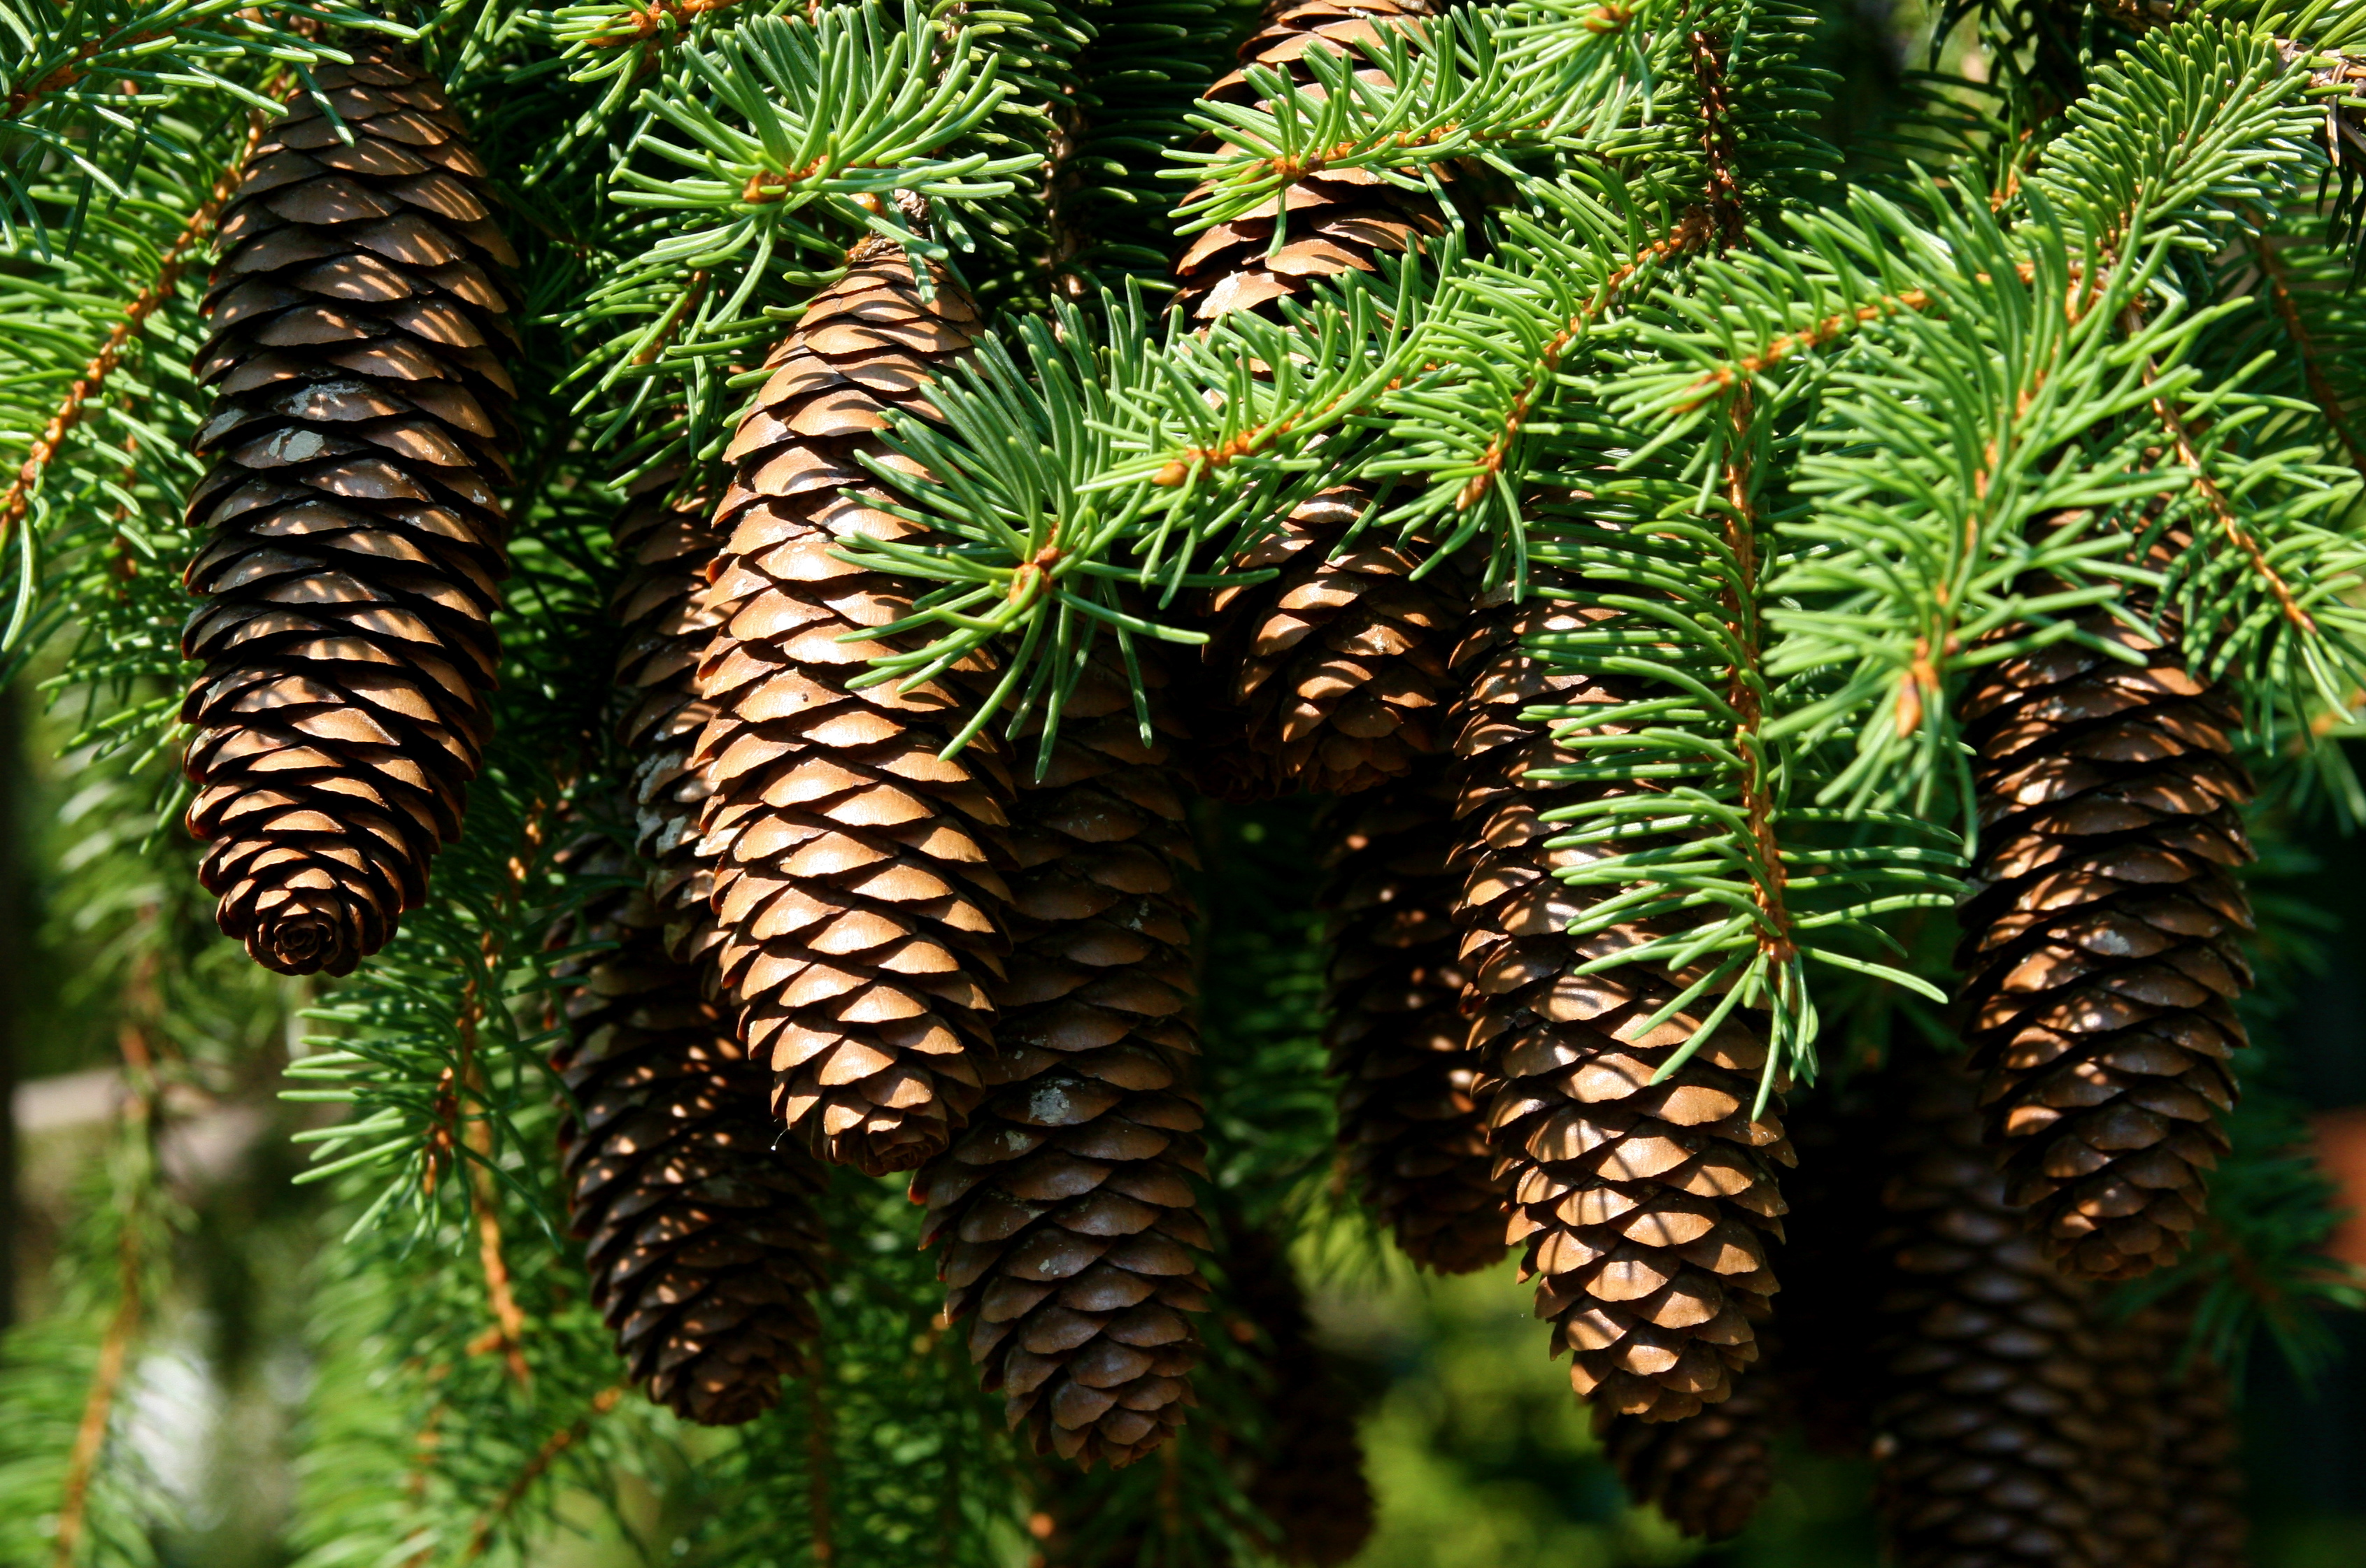 File:Pine cones 777.jpg - Wikimedia Commons